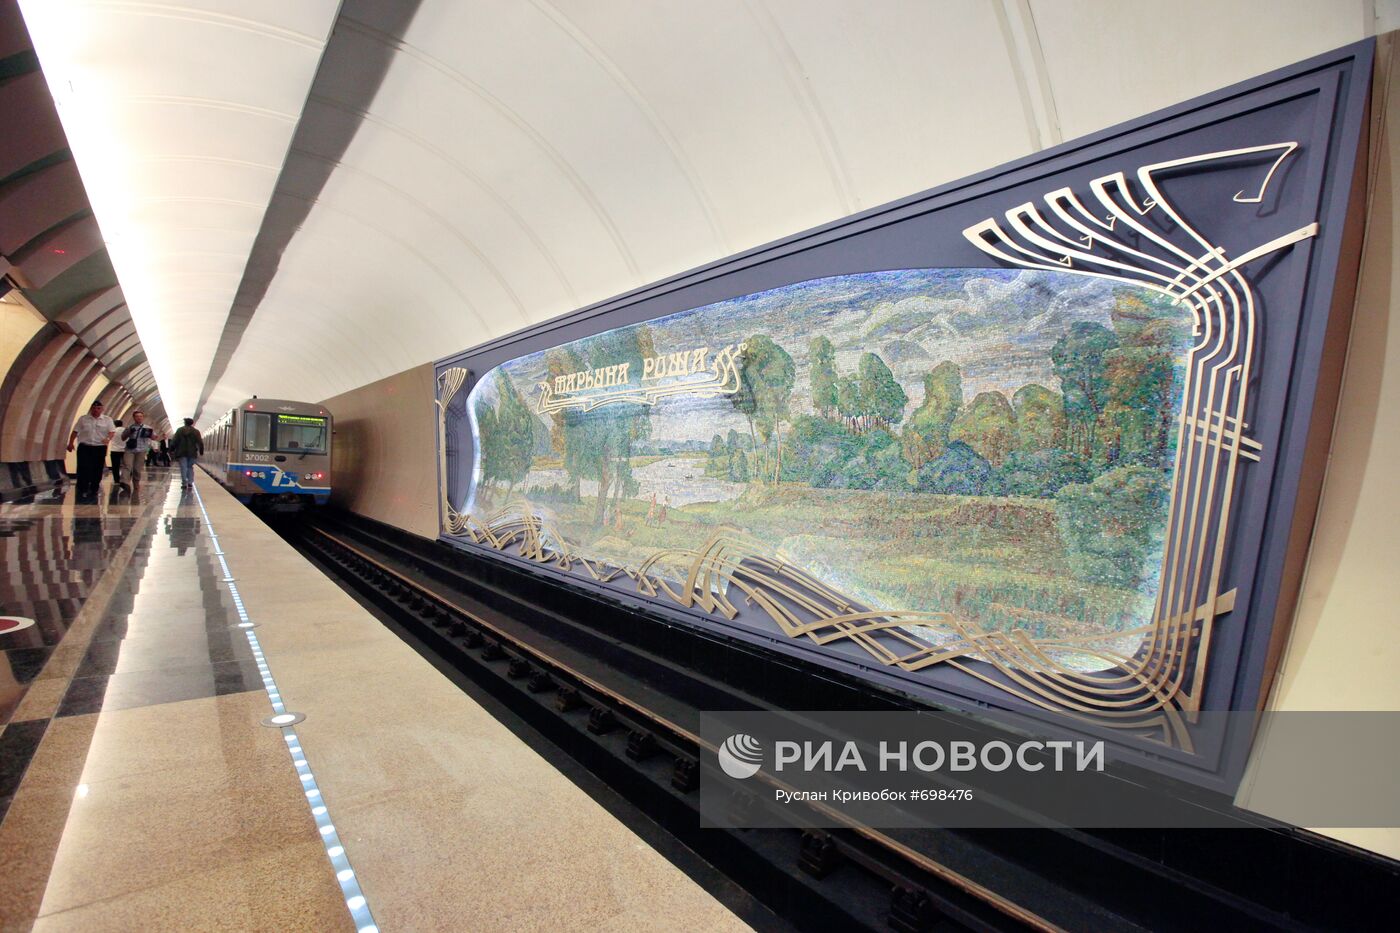 Платформа станции метро "Марьина Роща"